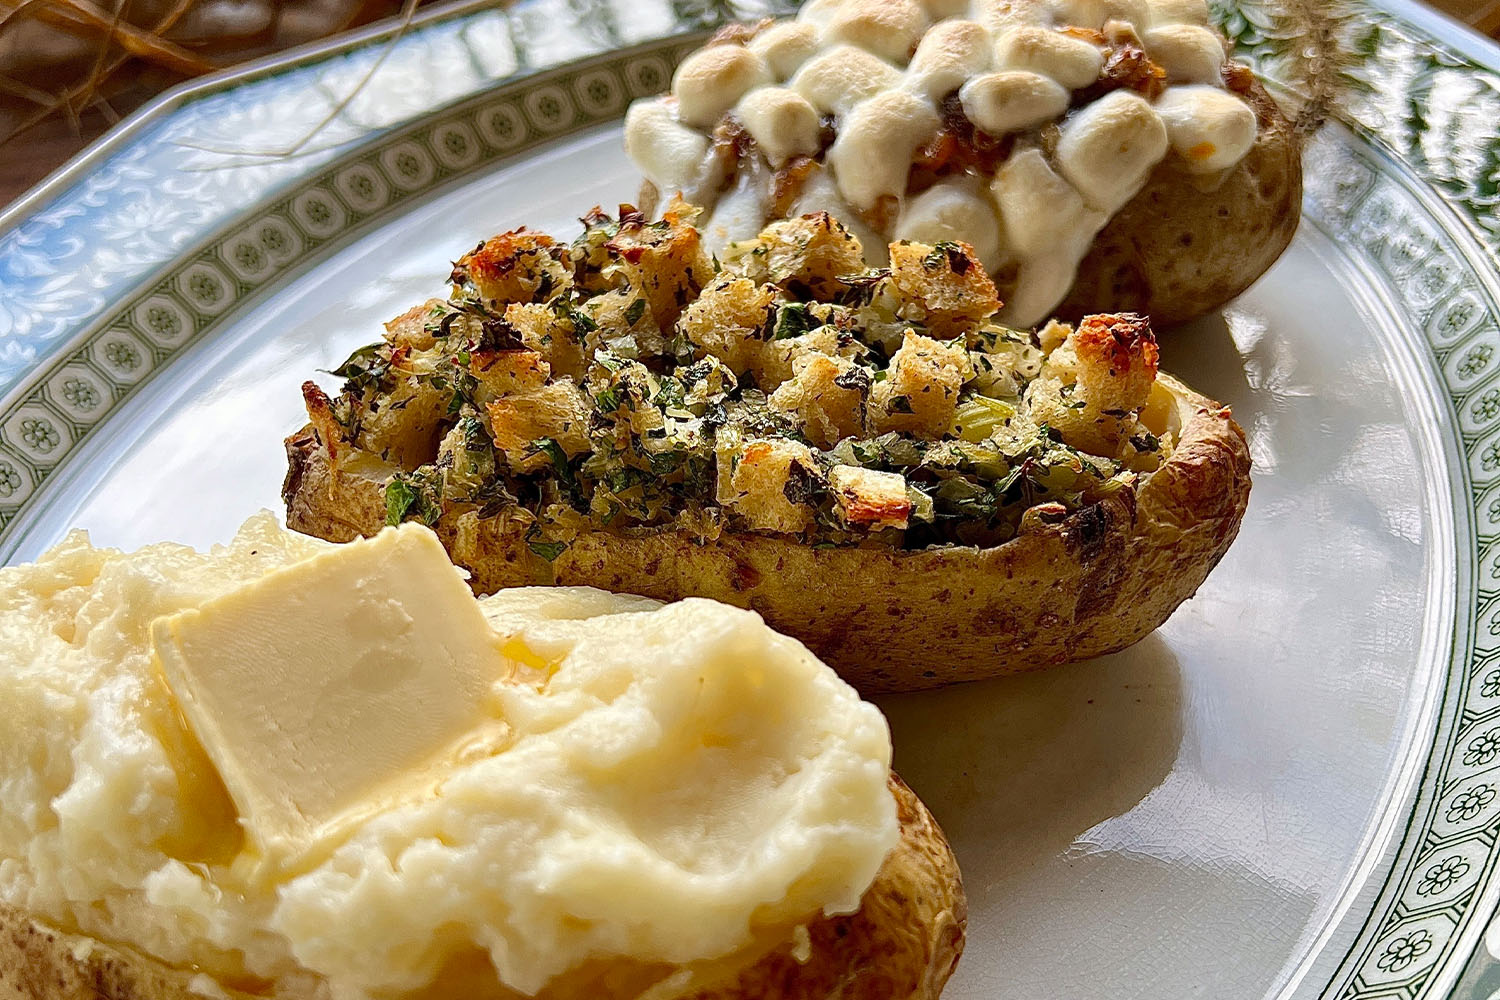 Three kinds of potatoes in potato shells